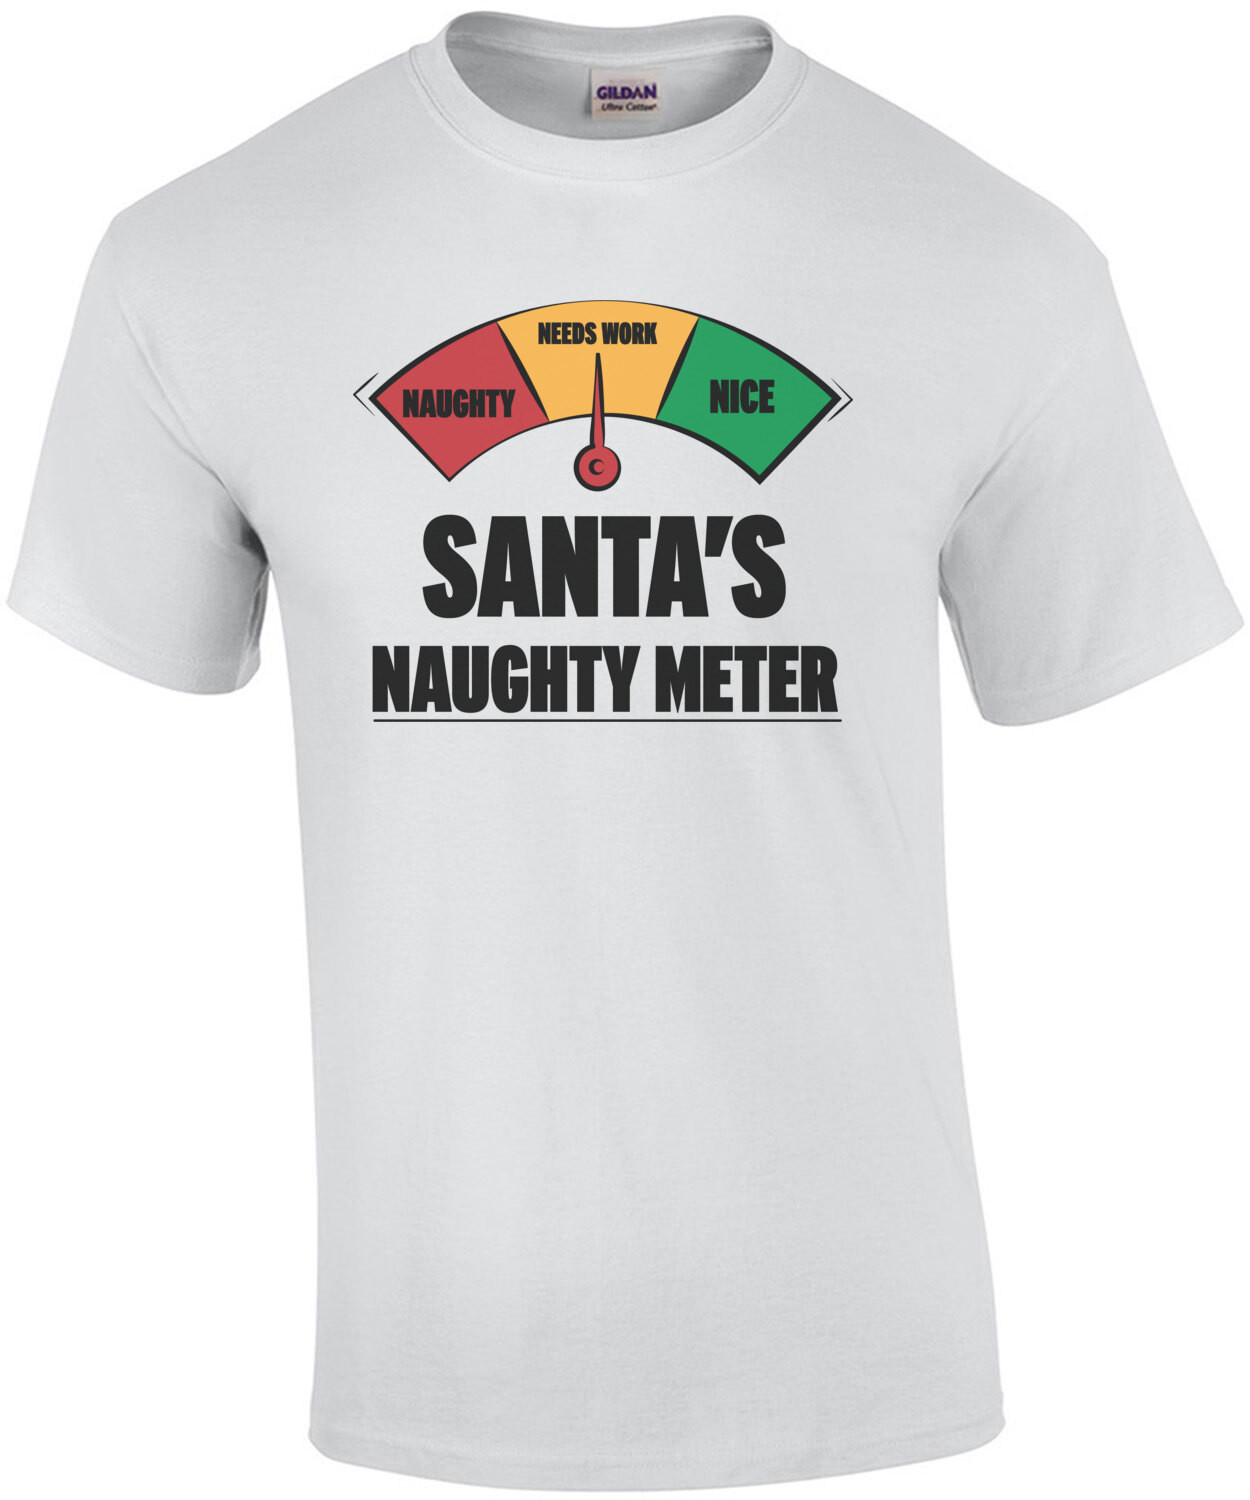 Santa's Naughty Meter - Funny Christmas T-Shirt